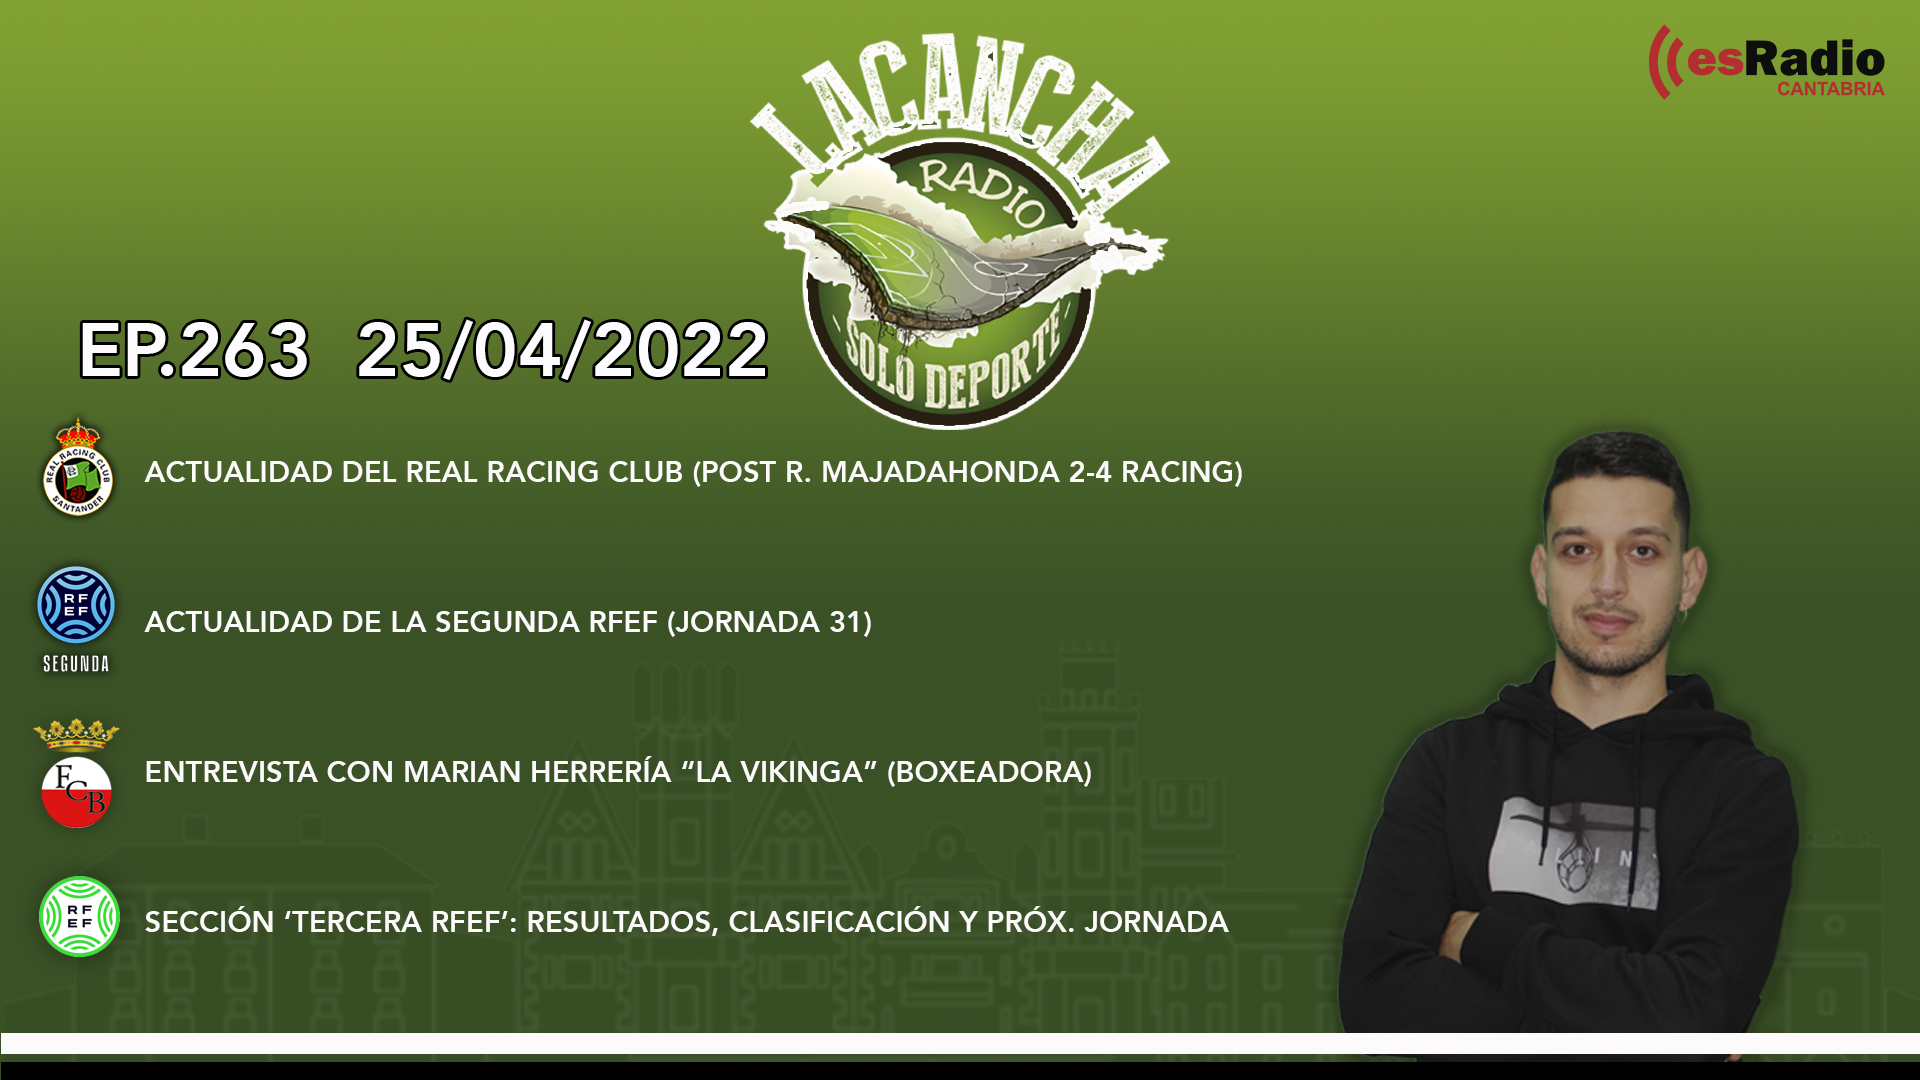 La Cancha Ep. 263 (25/04/2022)